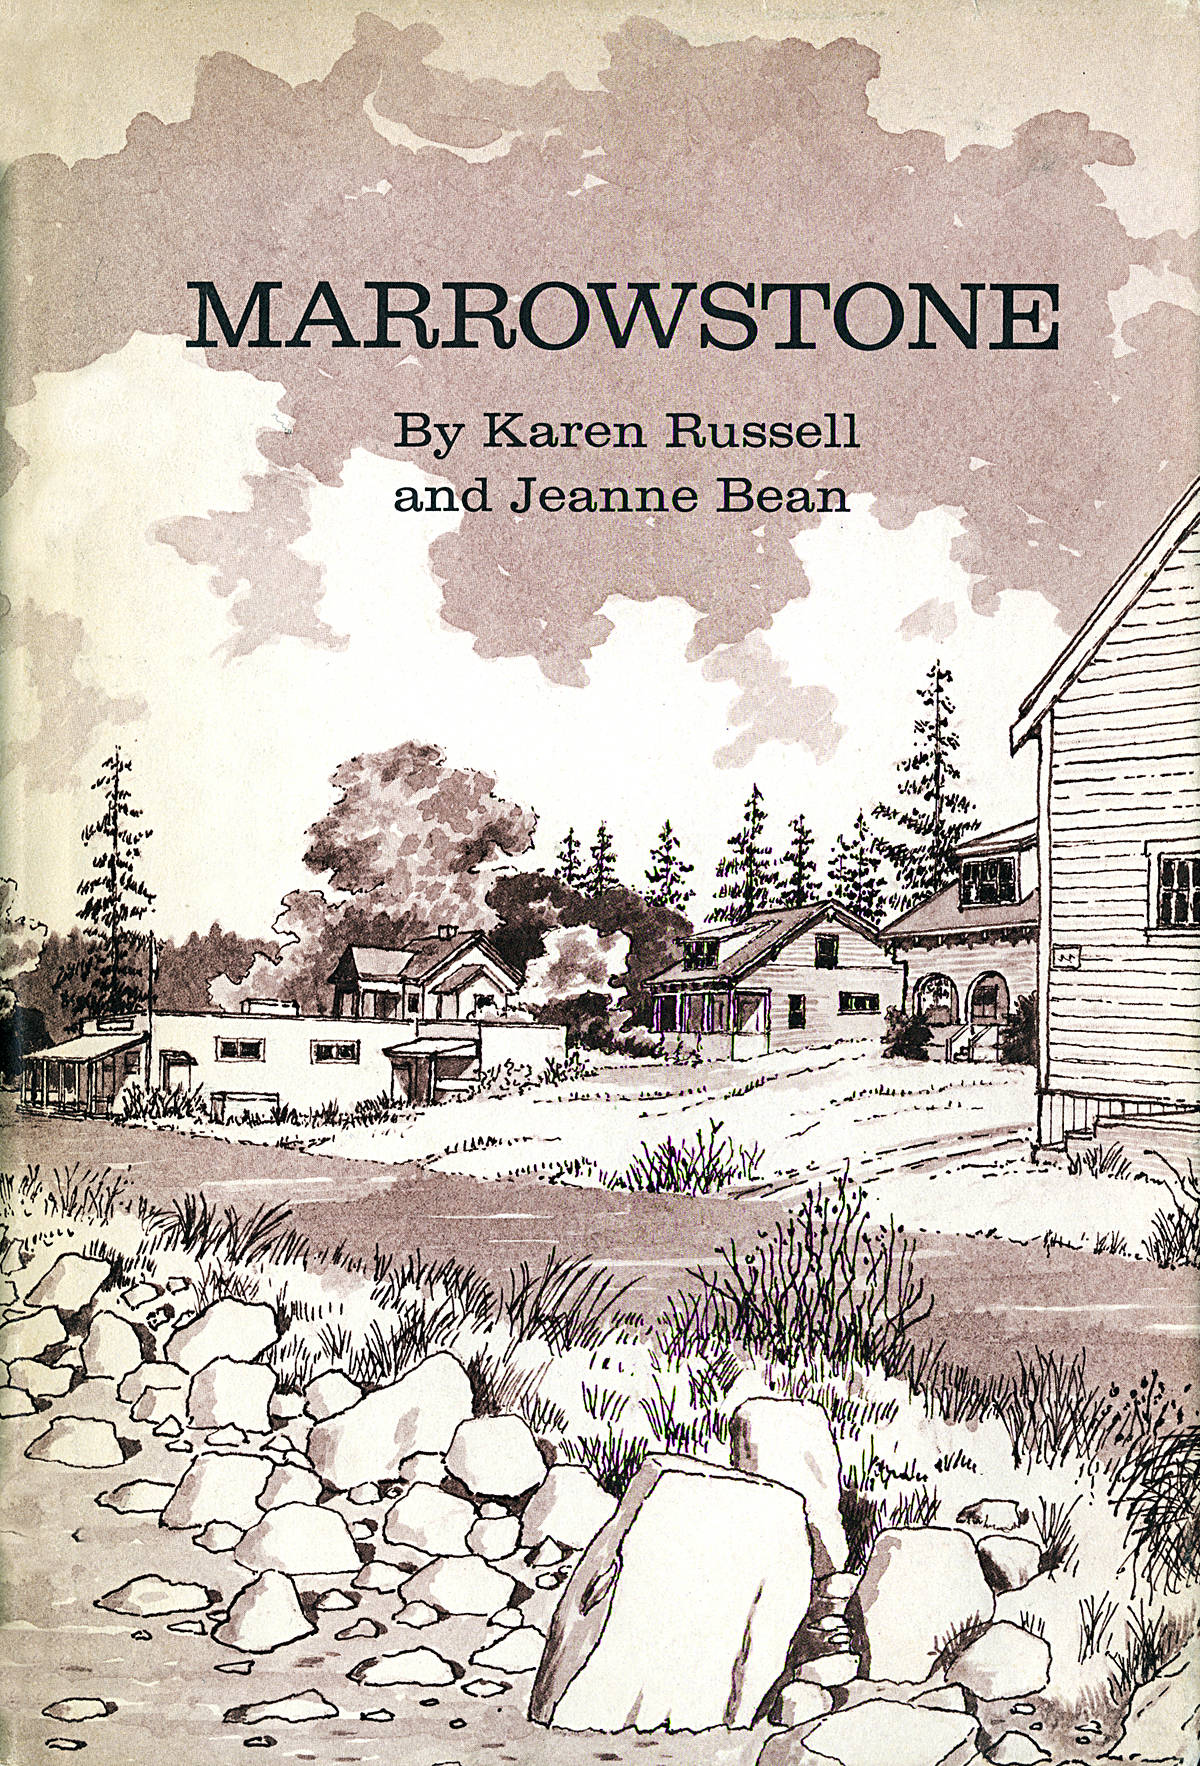 Marrowstone Island historian to speak